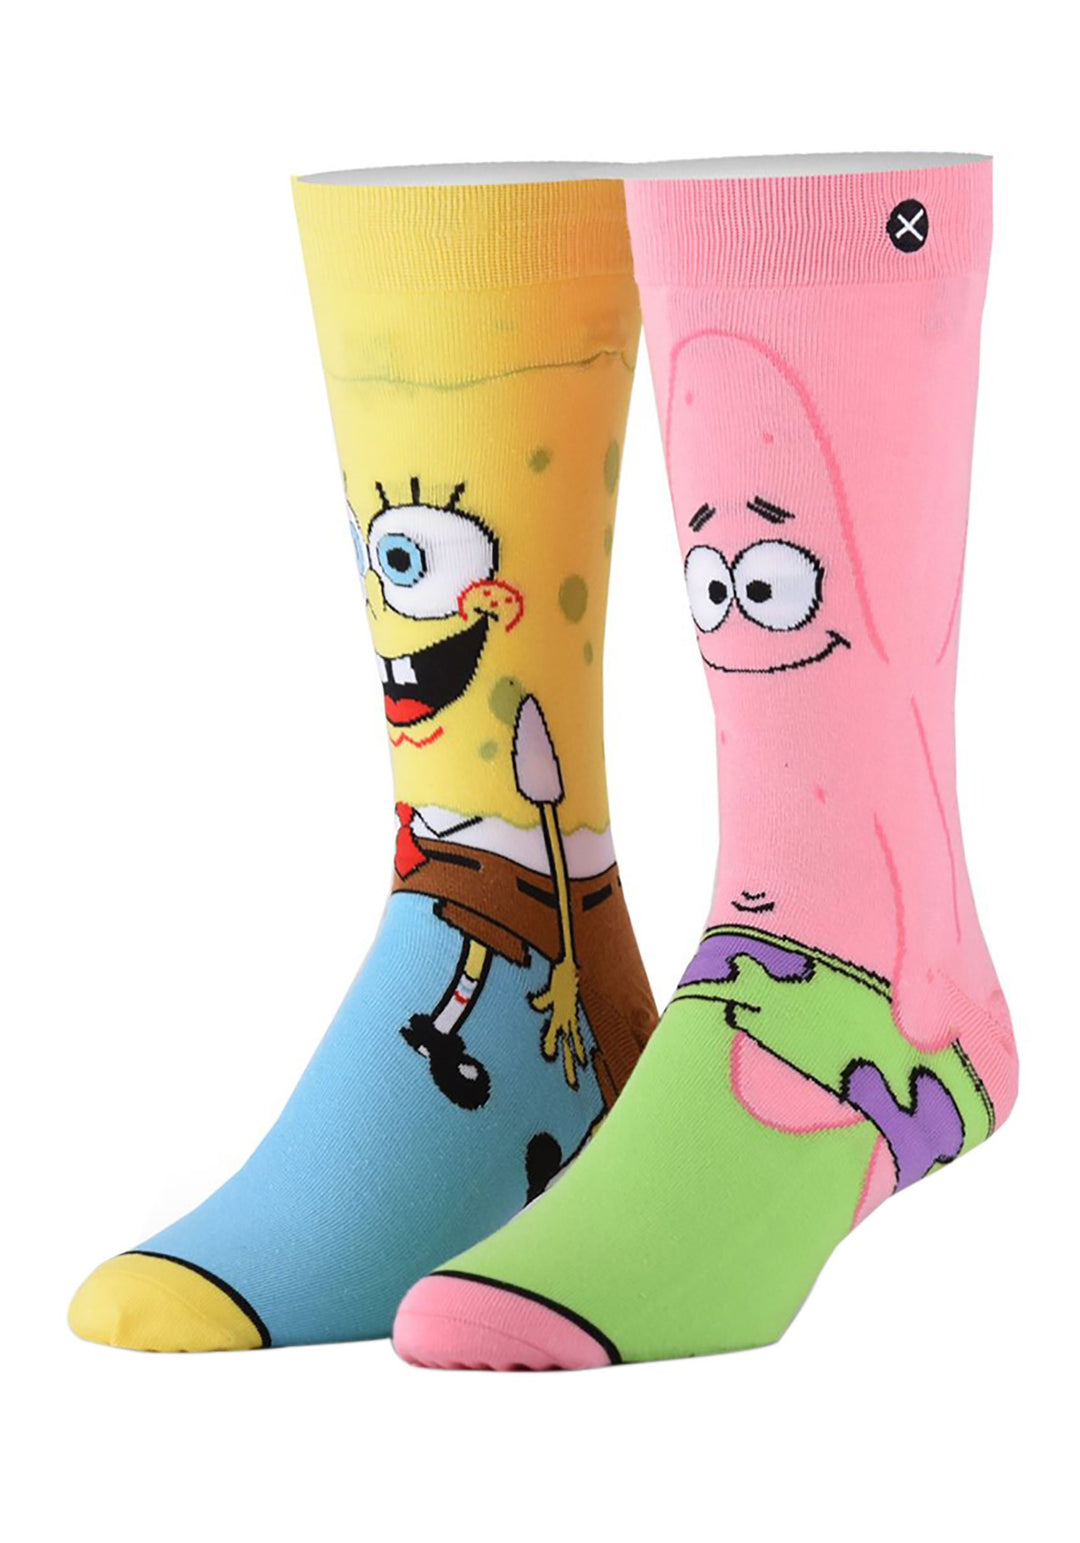 Spongebob & Patrick Cotton Crew Socks by ODD Sox – Great Sox